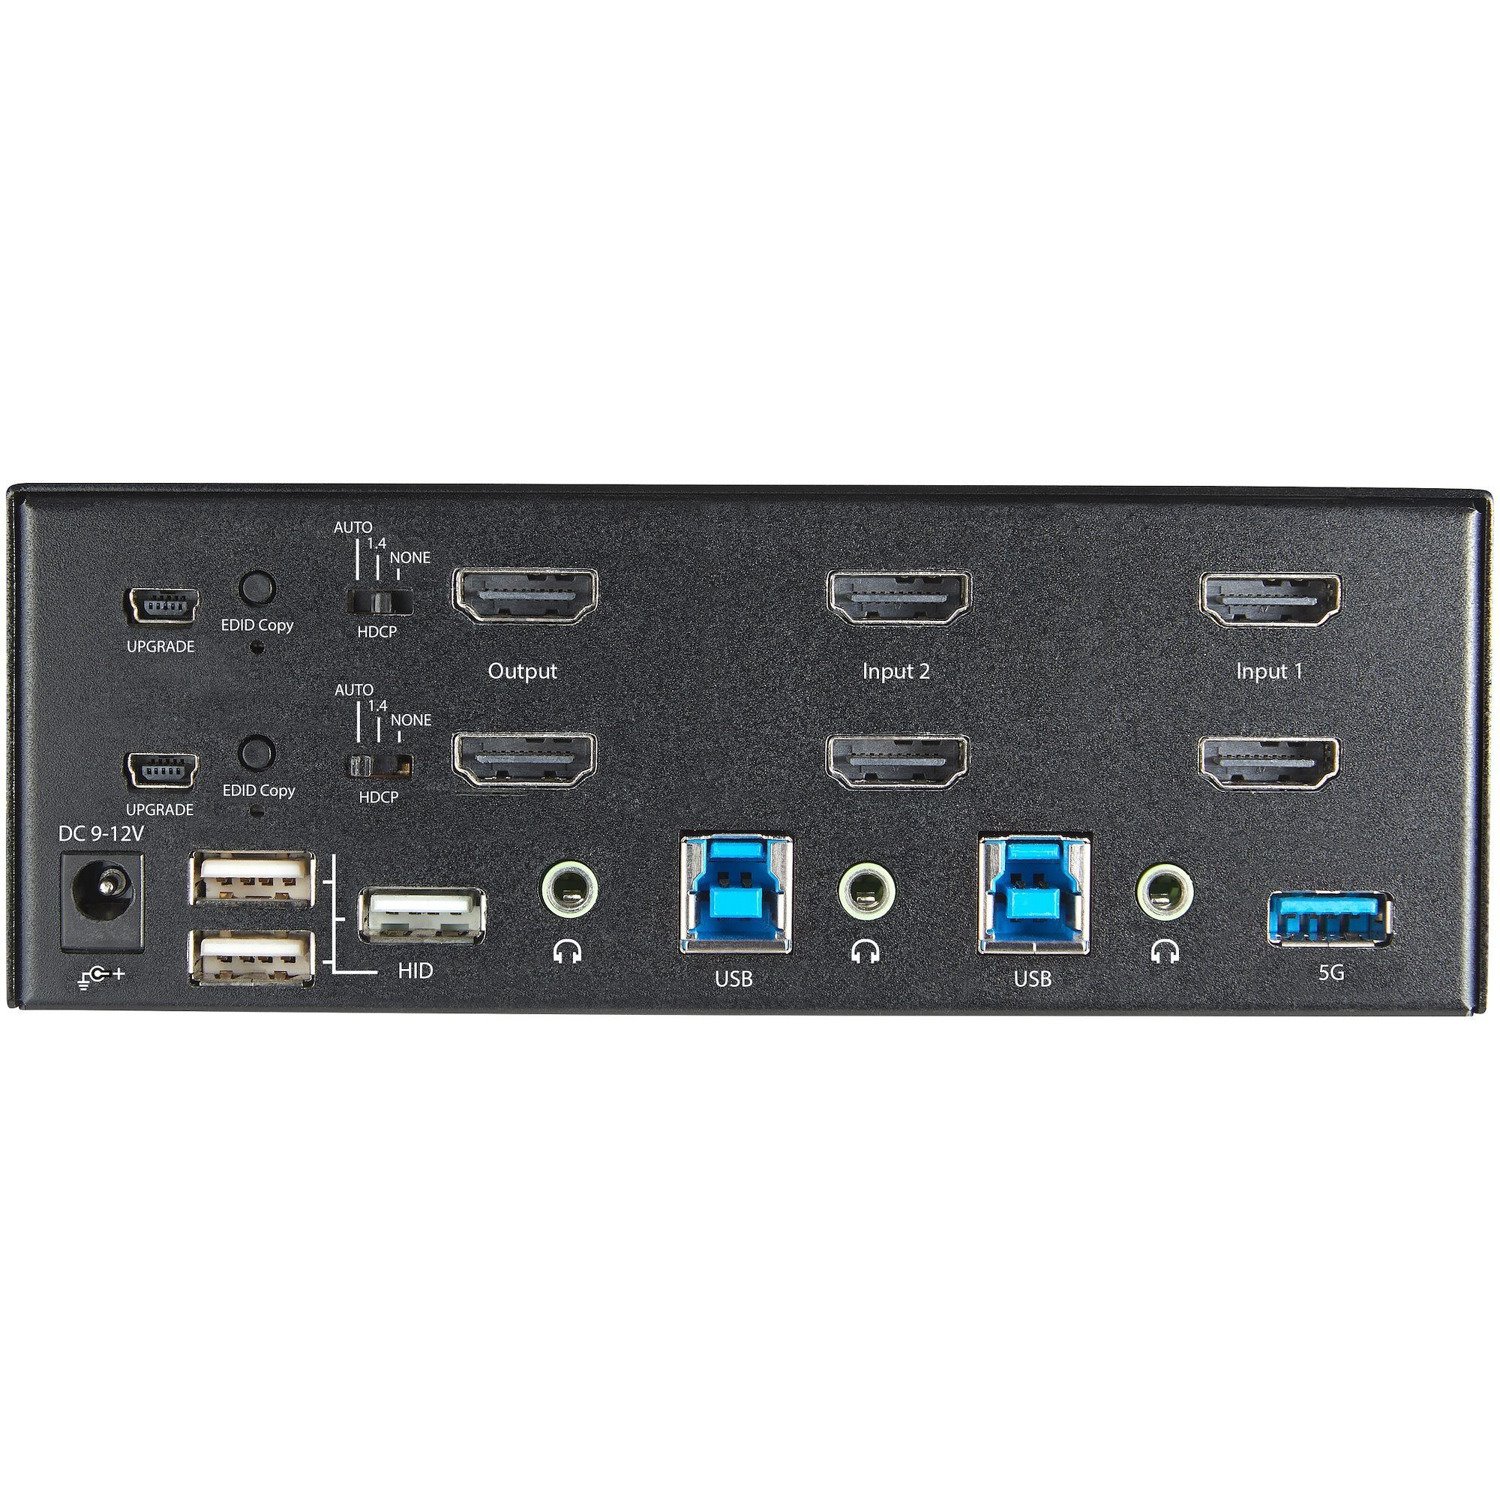 StarTech.com 2 Port Dual Monitor HDMI KVM Switch, 4K 60Hz HDMI 2.0 UHD HDR, 2 Port USB 3.0 Hub, 4x USB HID, Audio, Hotkey Switching, TAA